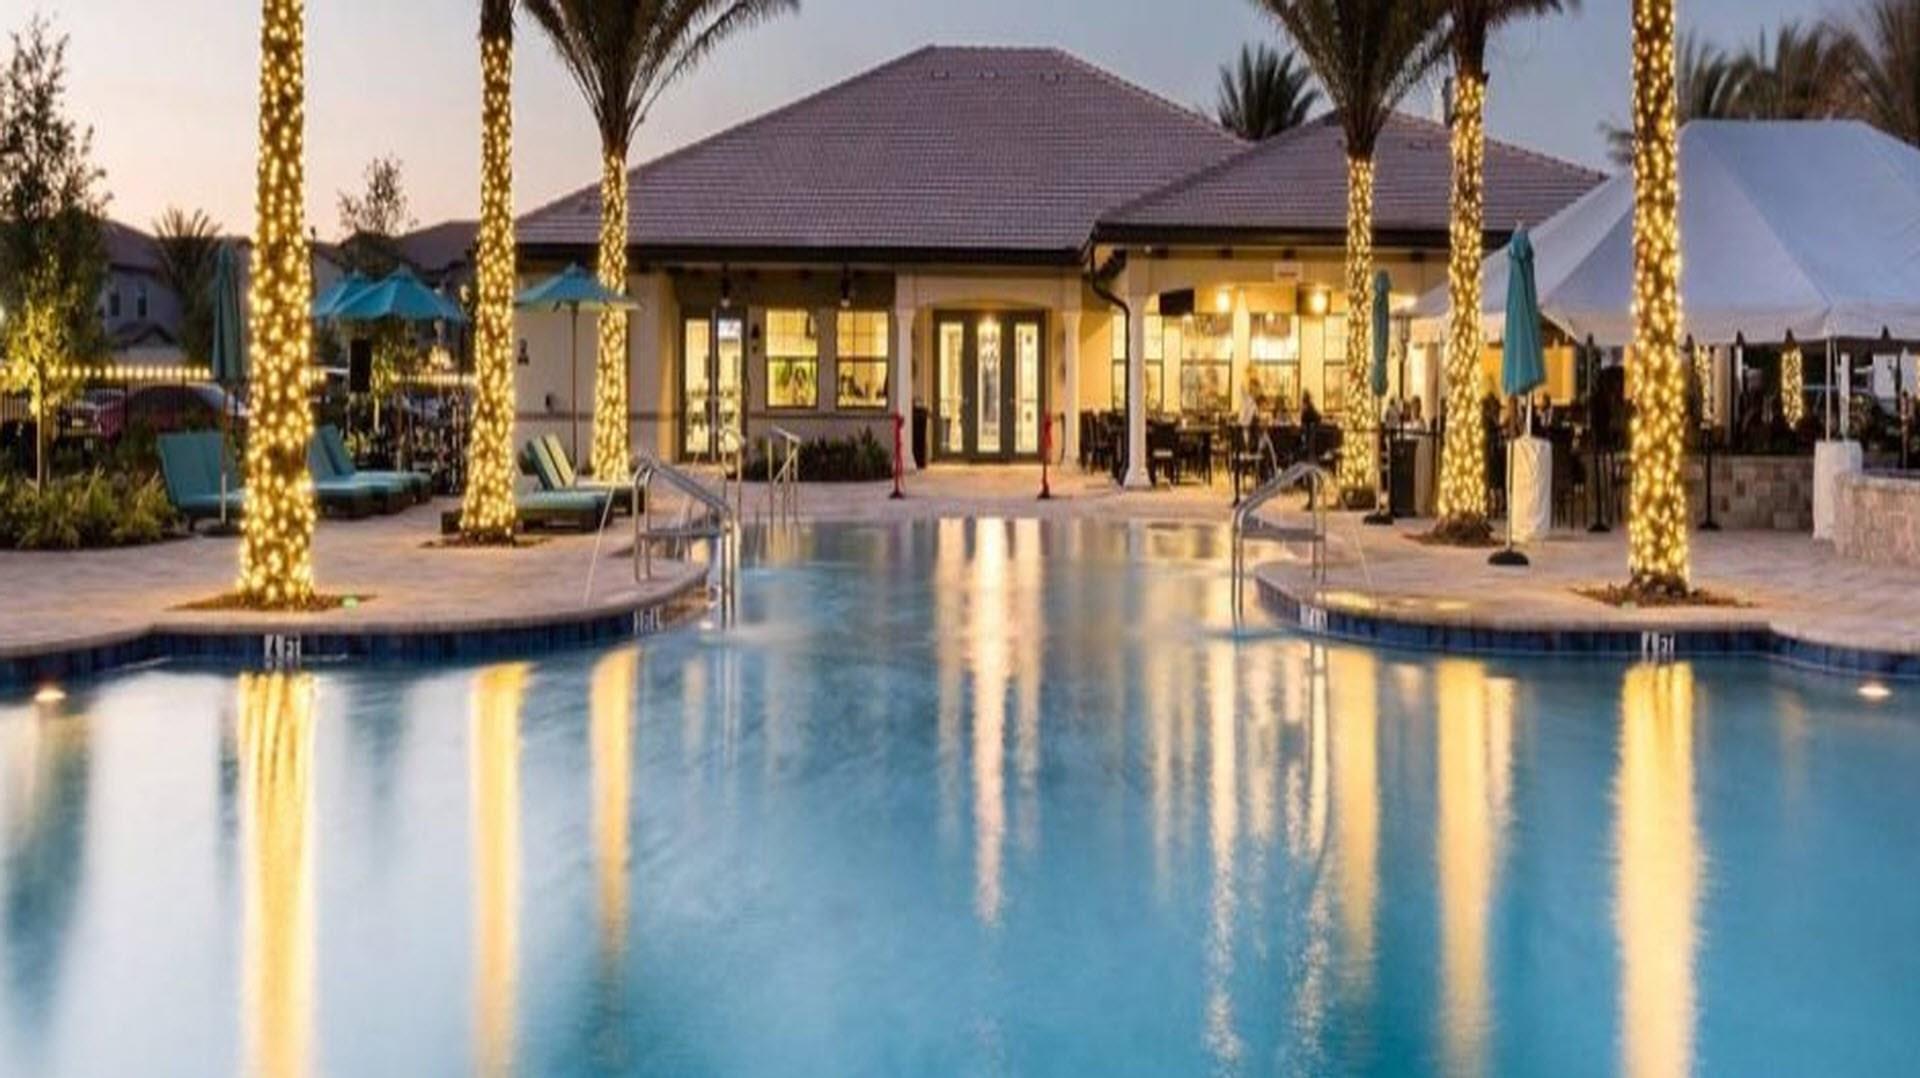 Balmoral Resort Florida in Haines City, FL